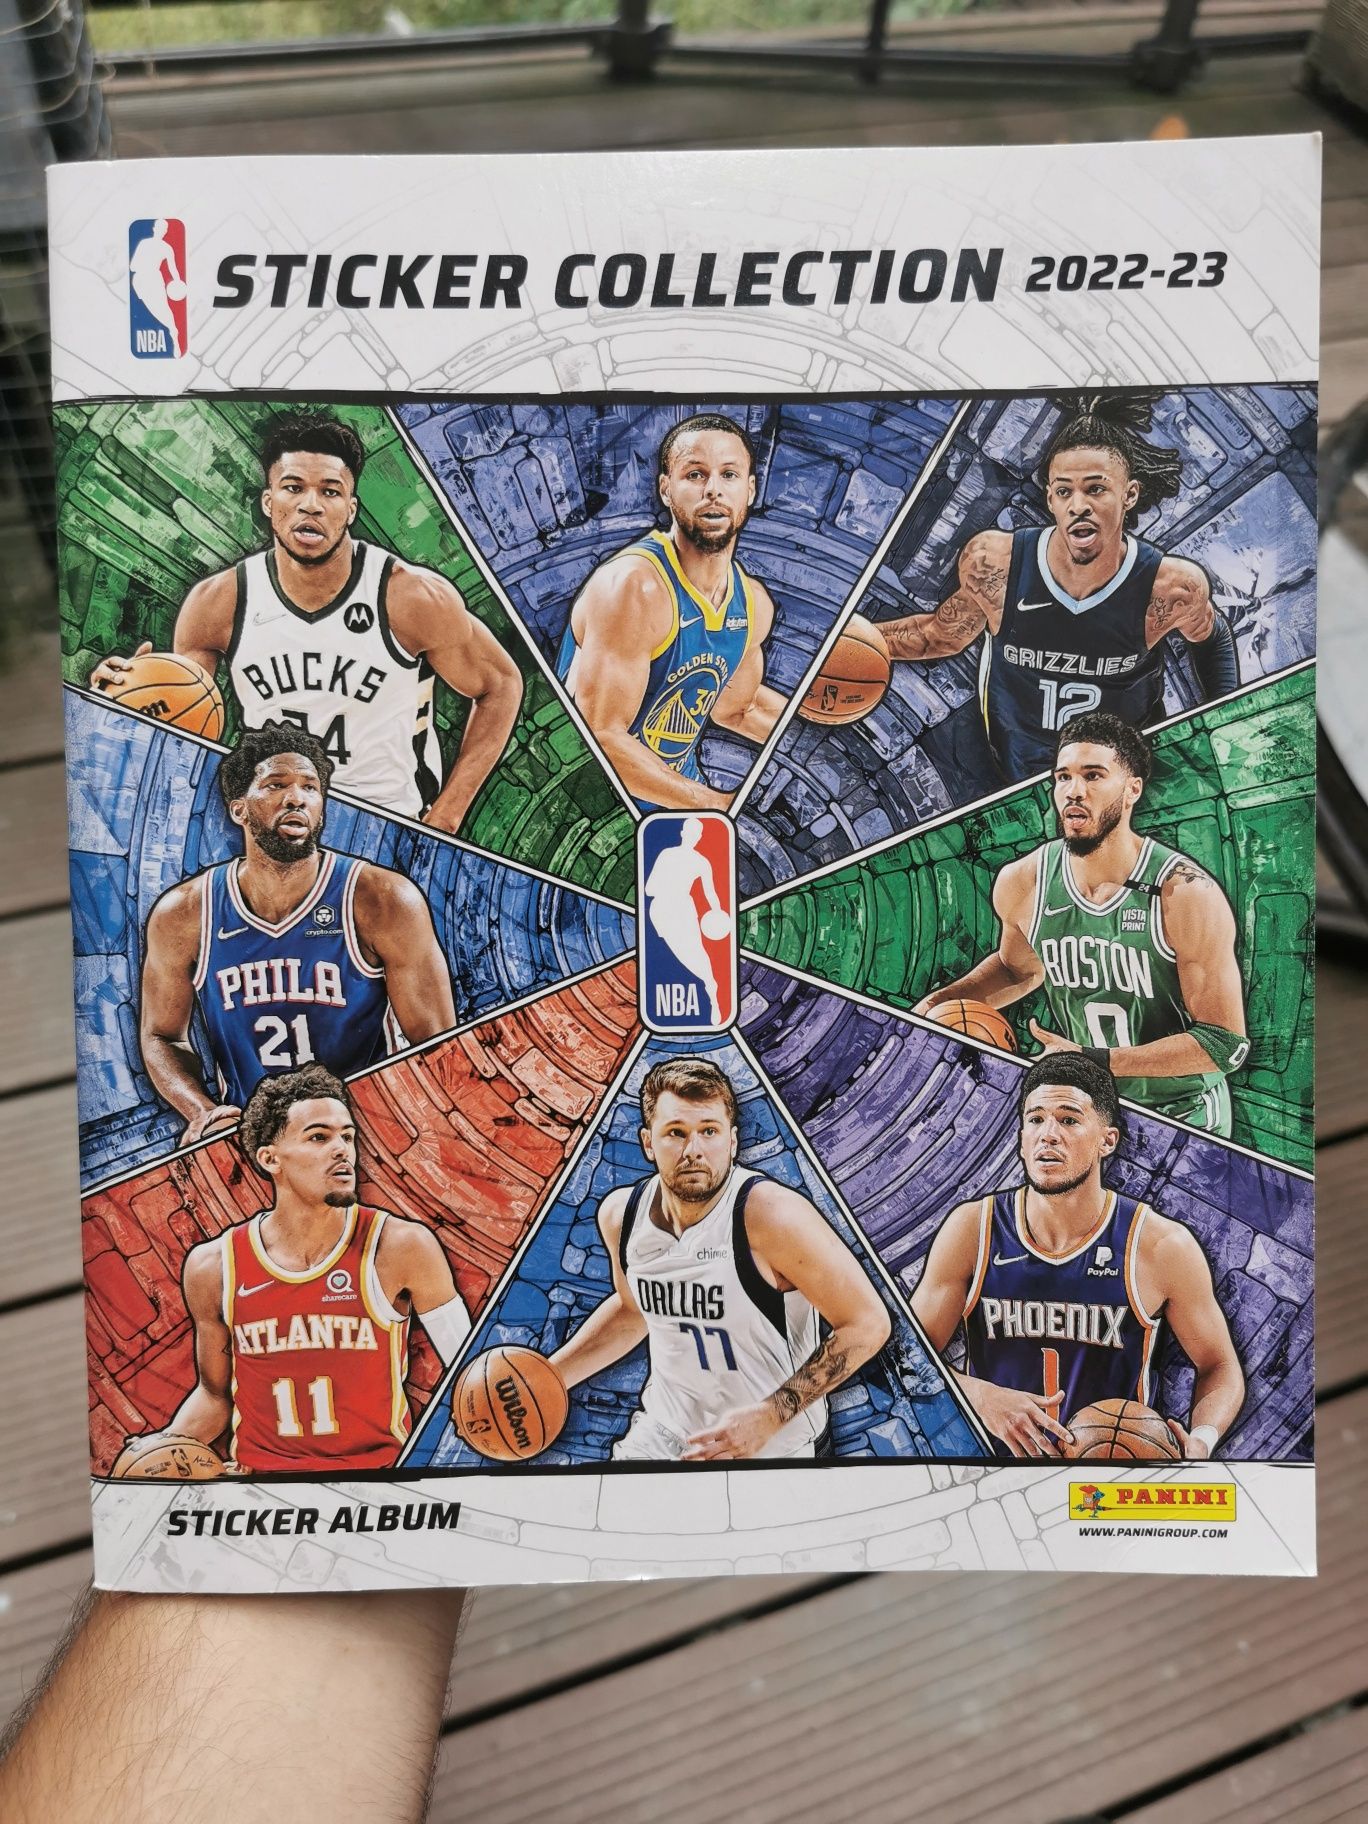 Nba sticker collection album 2022-23